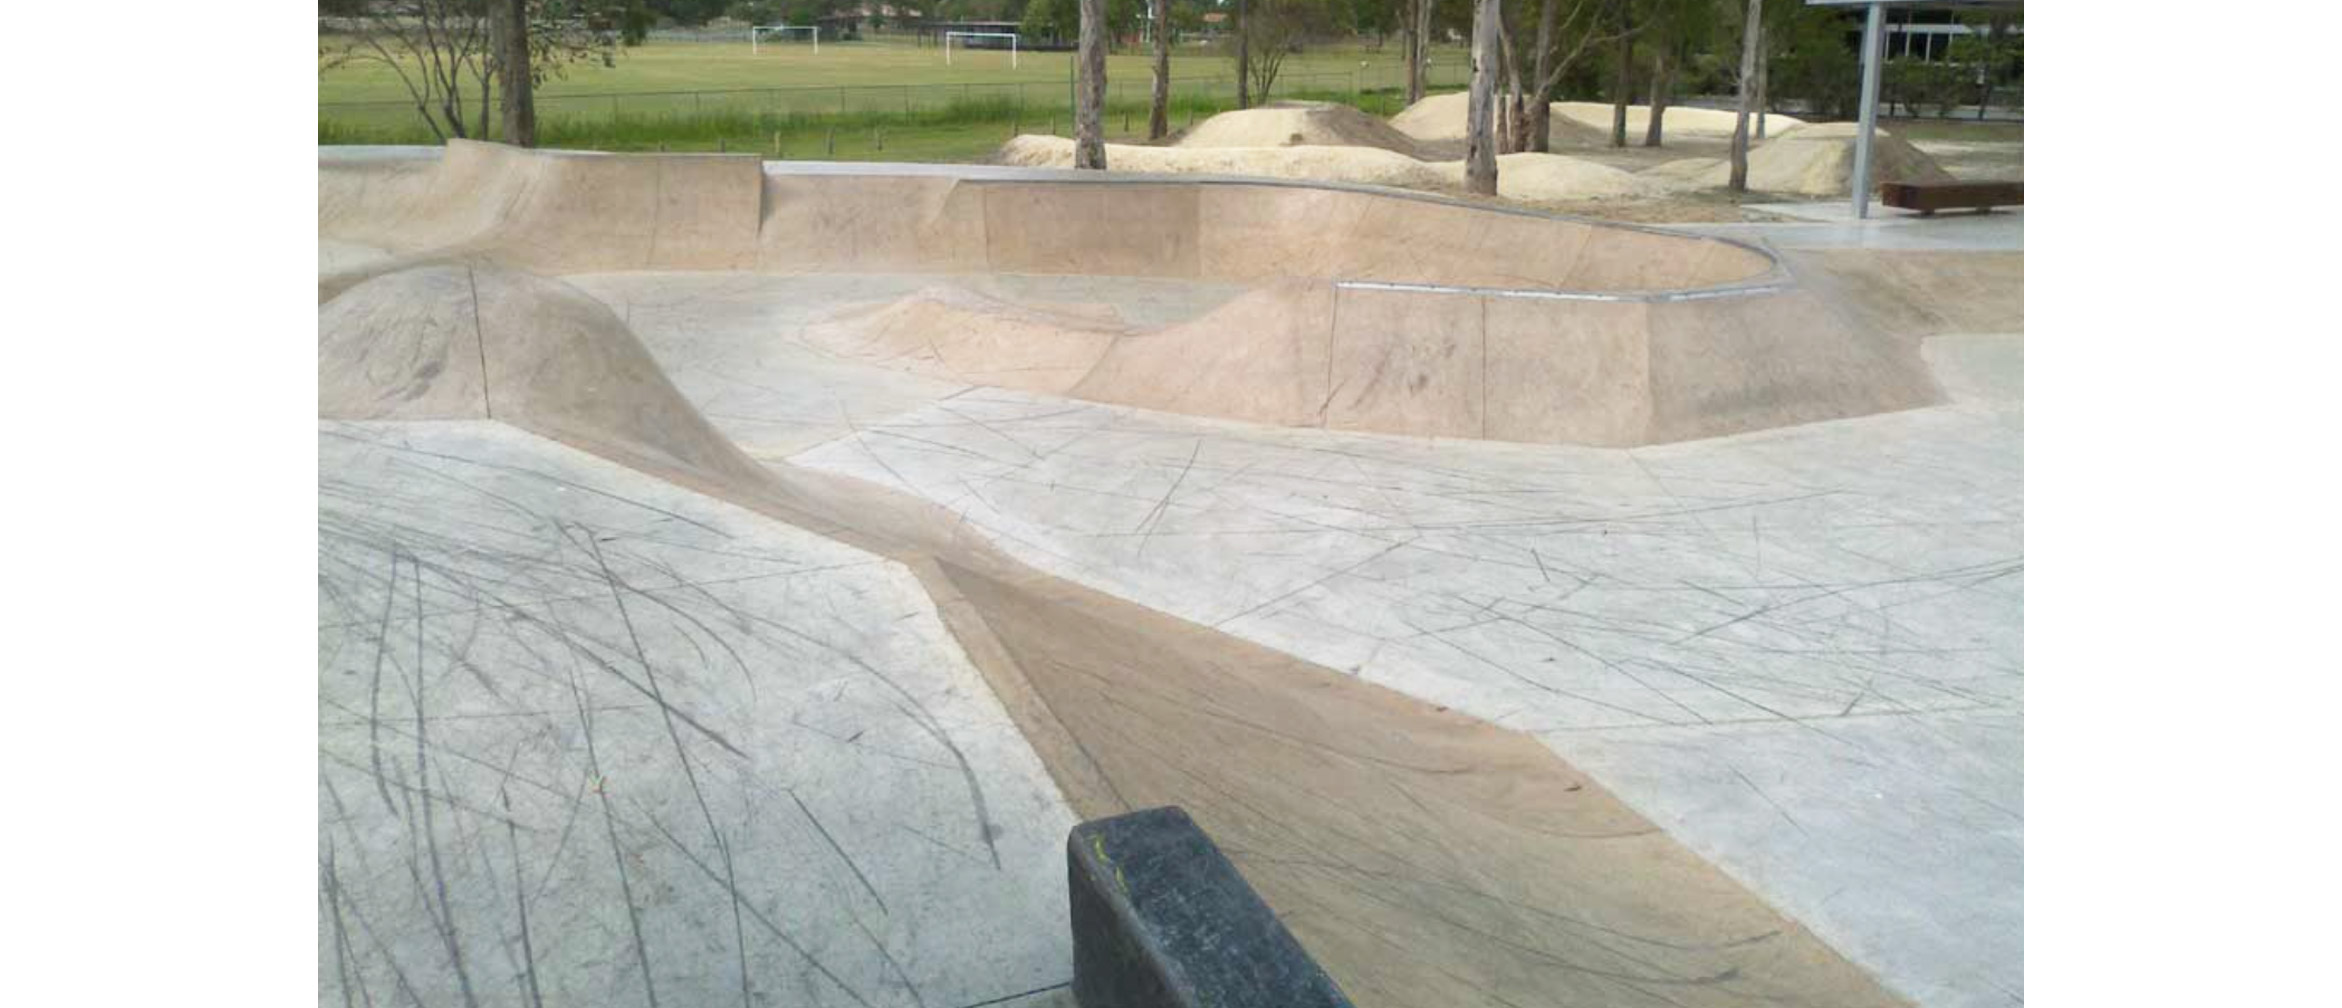 Ormeau skate park bowl section, Concrete Skateparks build